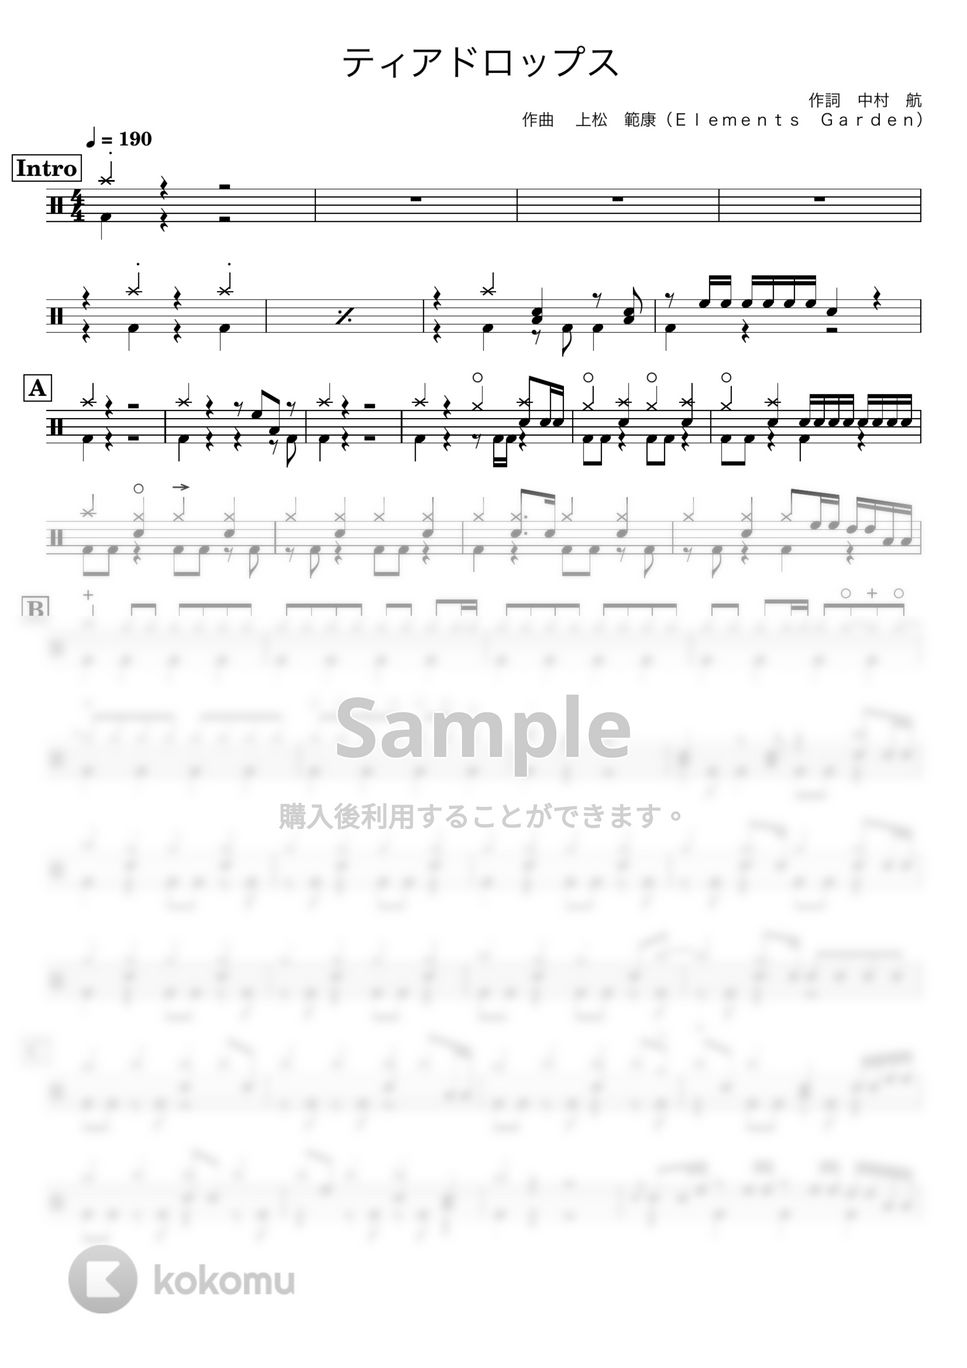 Poppin'Party - 【ドラム譜】ティアドロップス【完コピ】 by Taiki Mizumoto